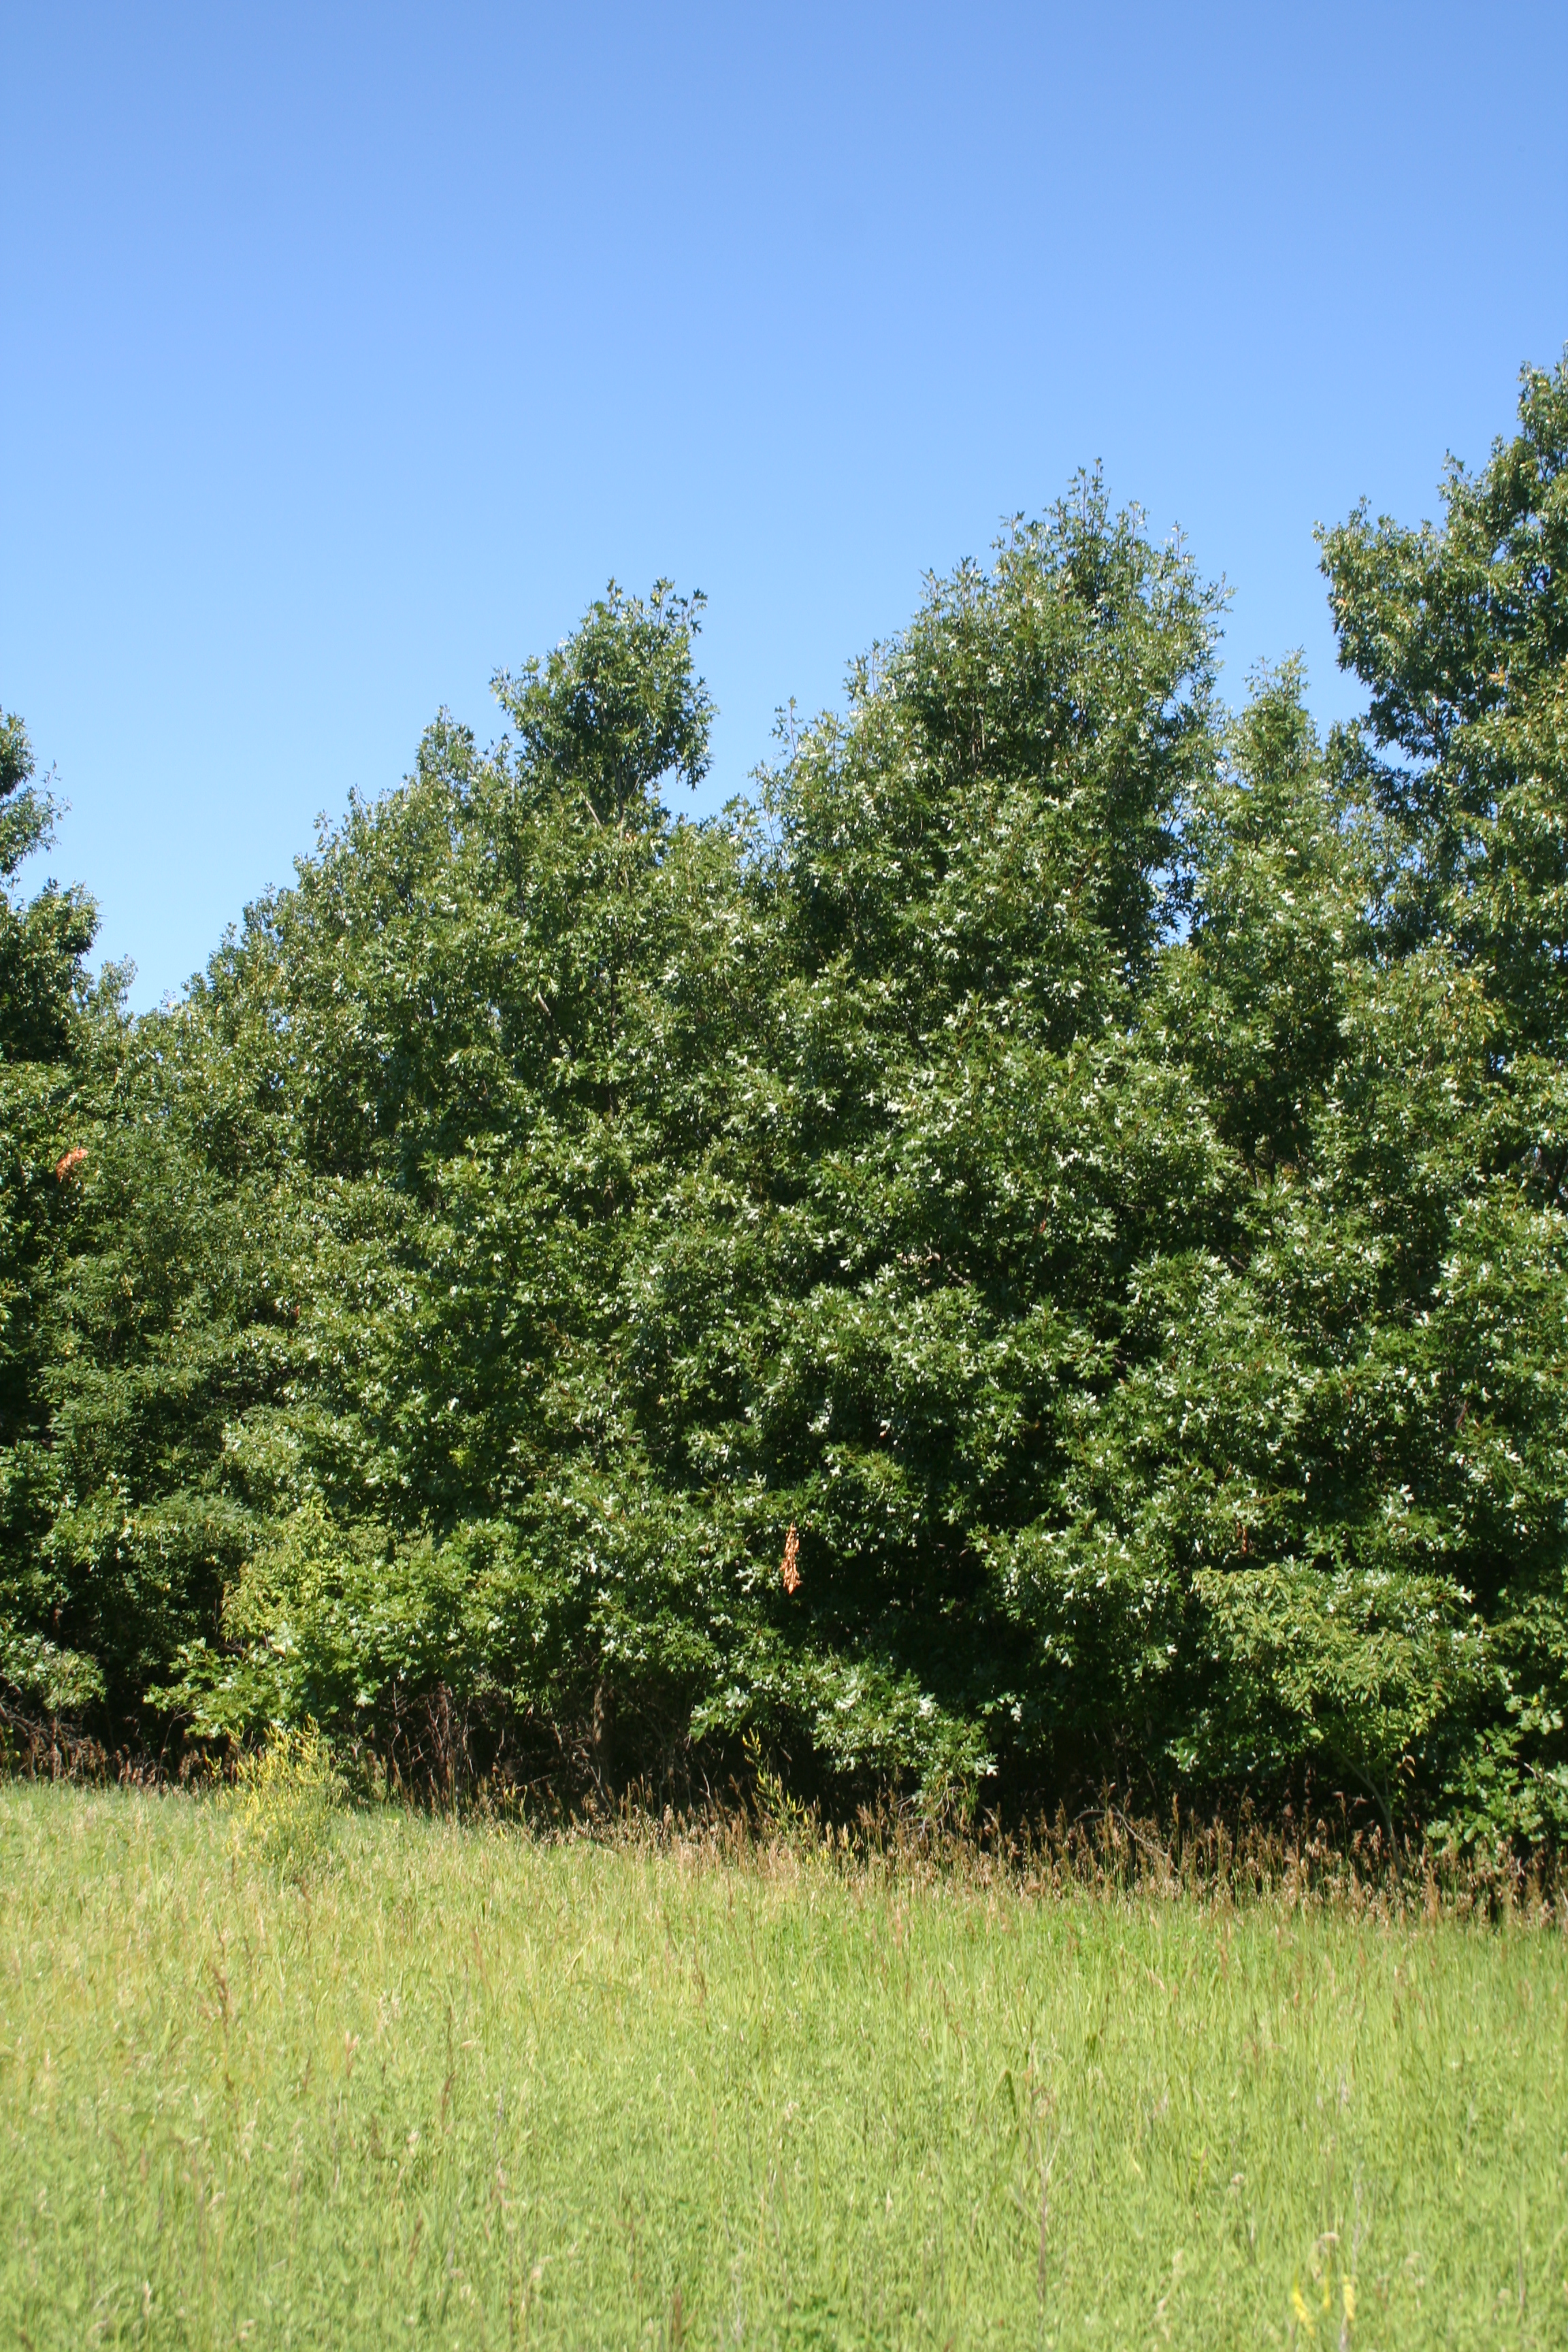 Black Oak trees